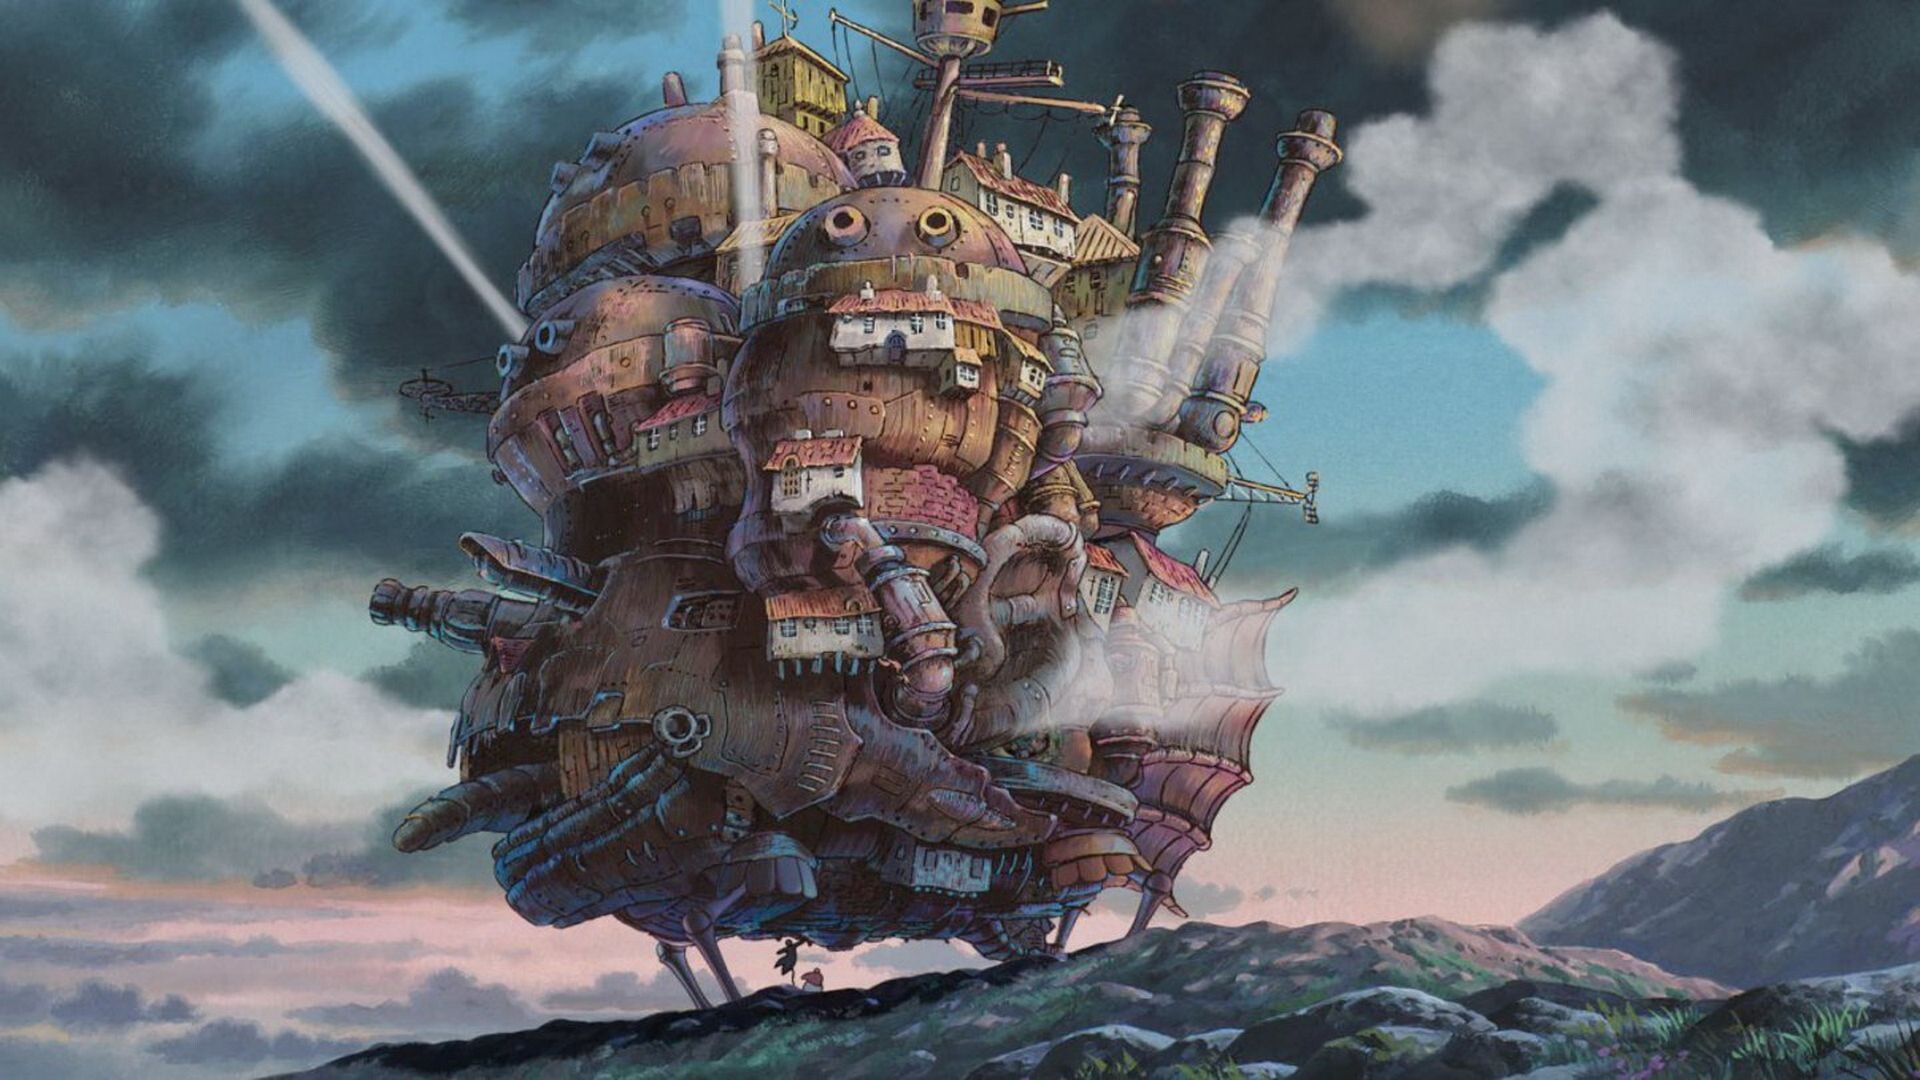 Studio Ghibli: Howl's Moving Castle premiered at the 61st Venice International Film Festival. 1920x1080 Full HD Wallpaper.